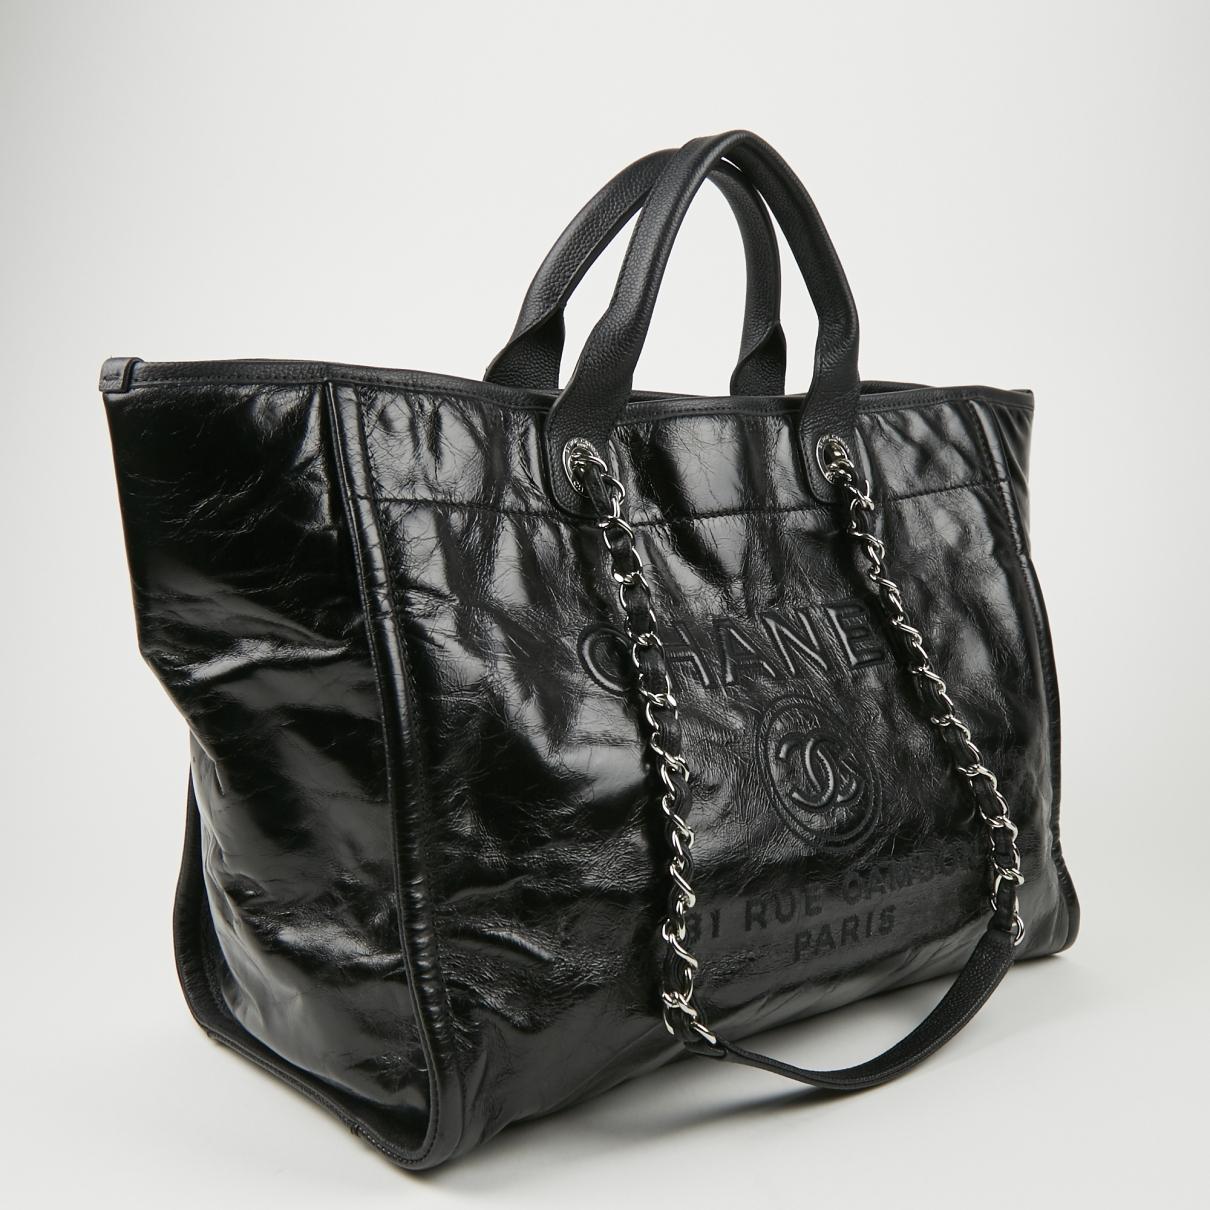 Lyst - Chanel Deauville Black Leather Handbag in Black